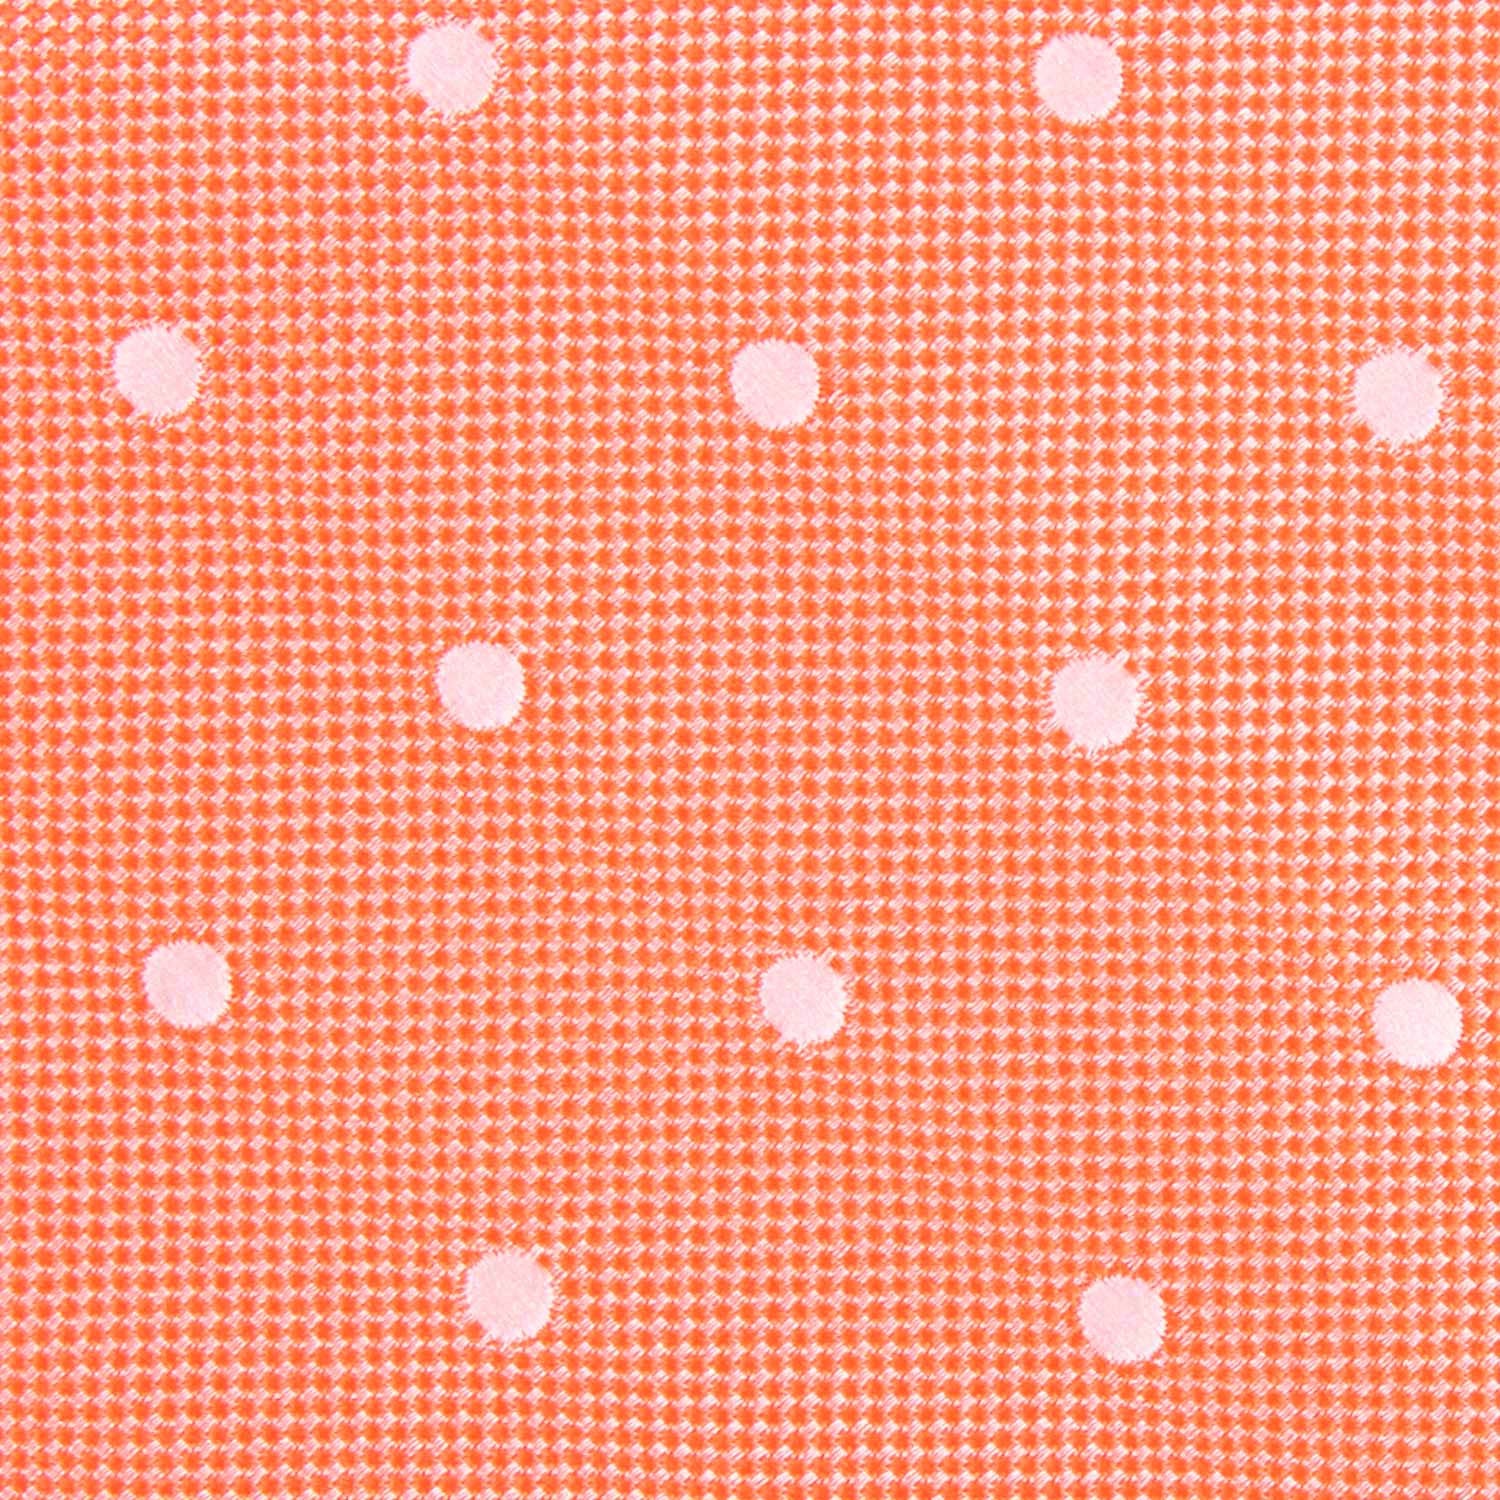 Coral Orange with White Polka Dots Fabric Self Tie Diamond Tip Bow TieM142